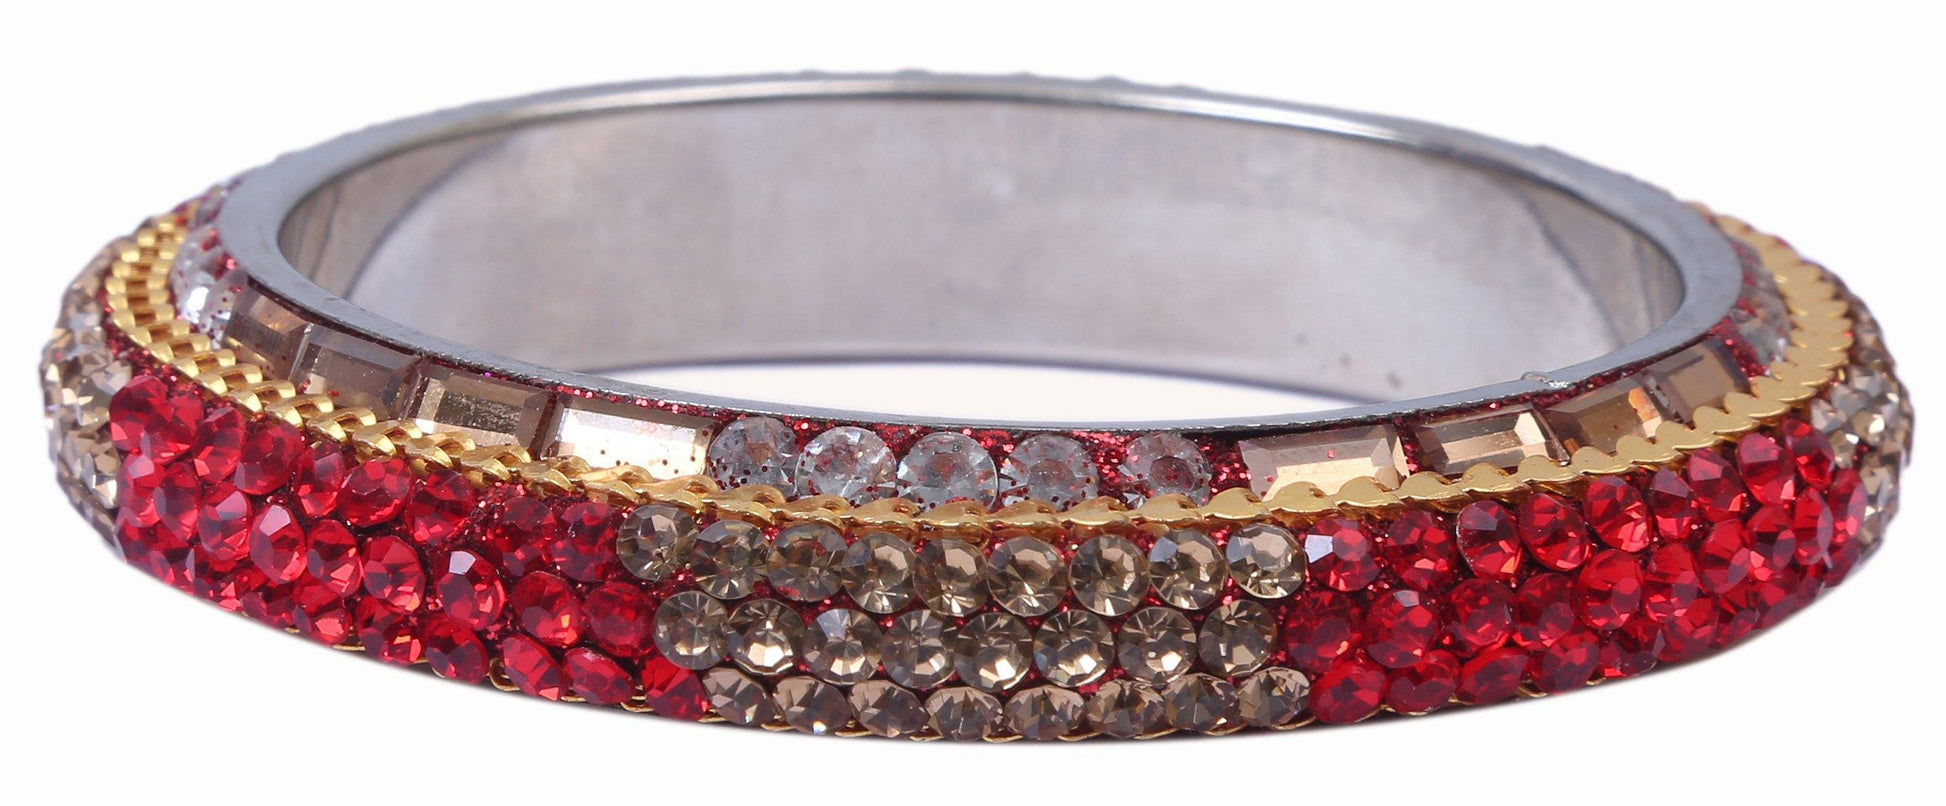 sukriti bollywood fashion stylish party-wear red brass bangles bracelet for women & girls - set of 2